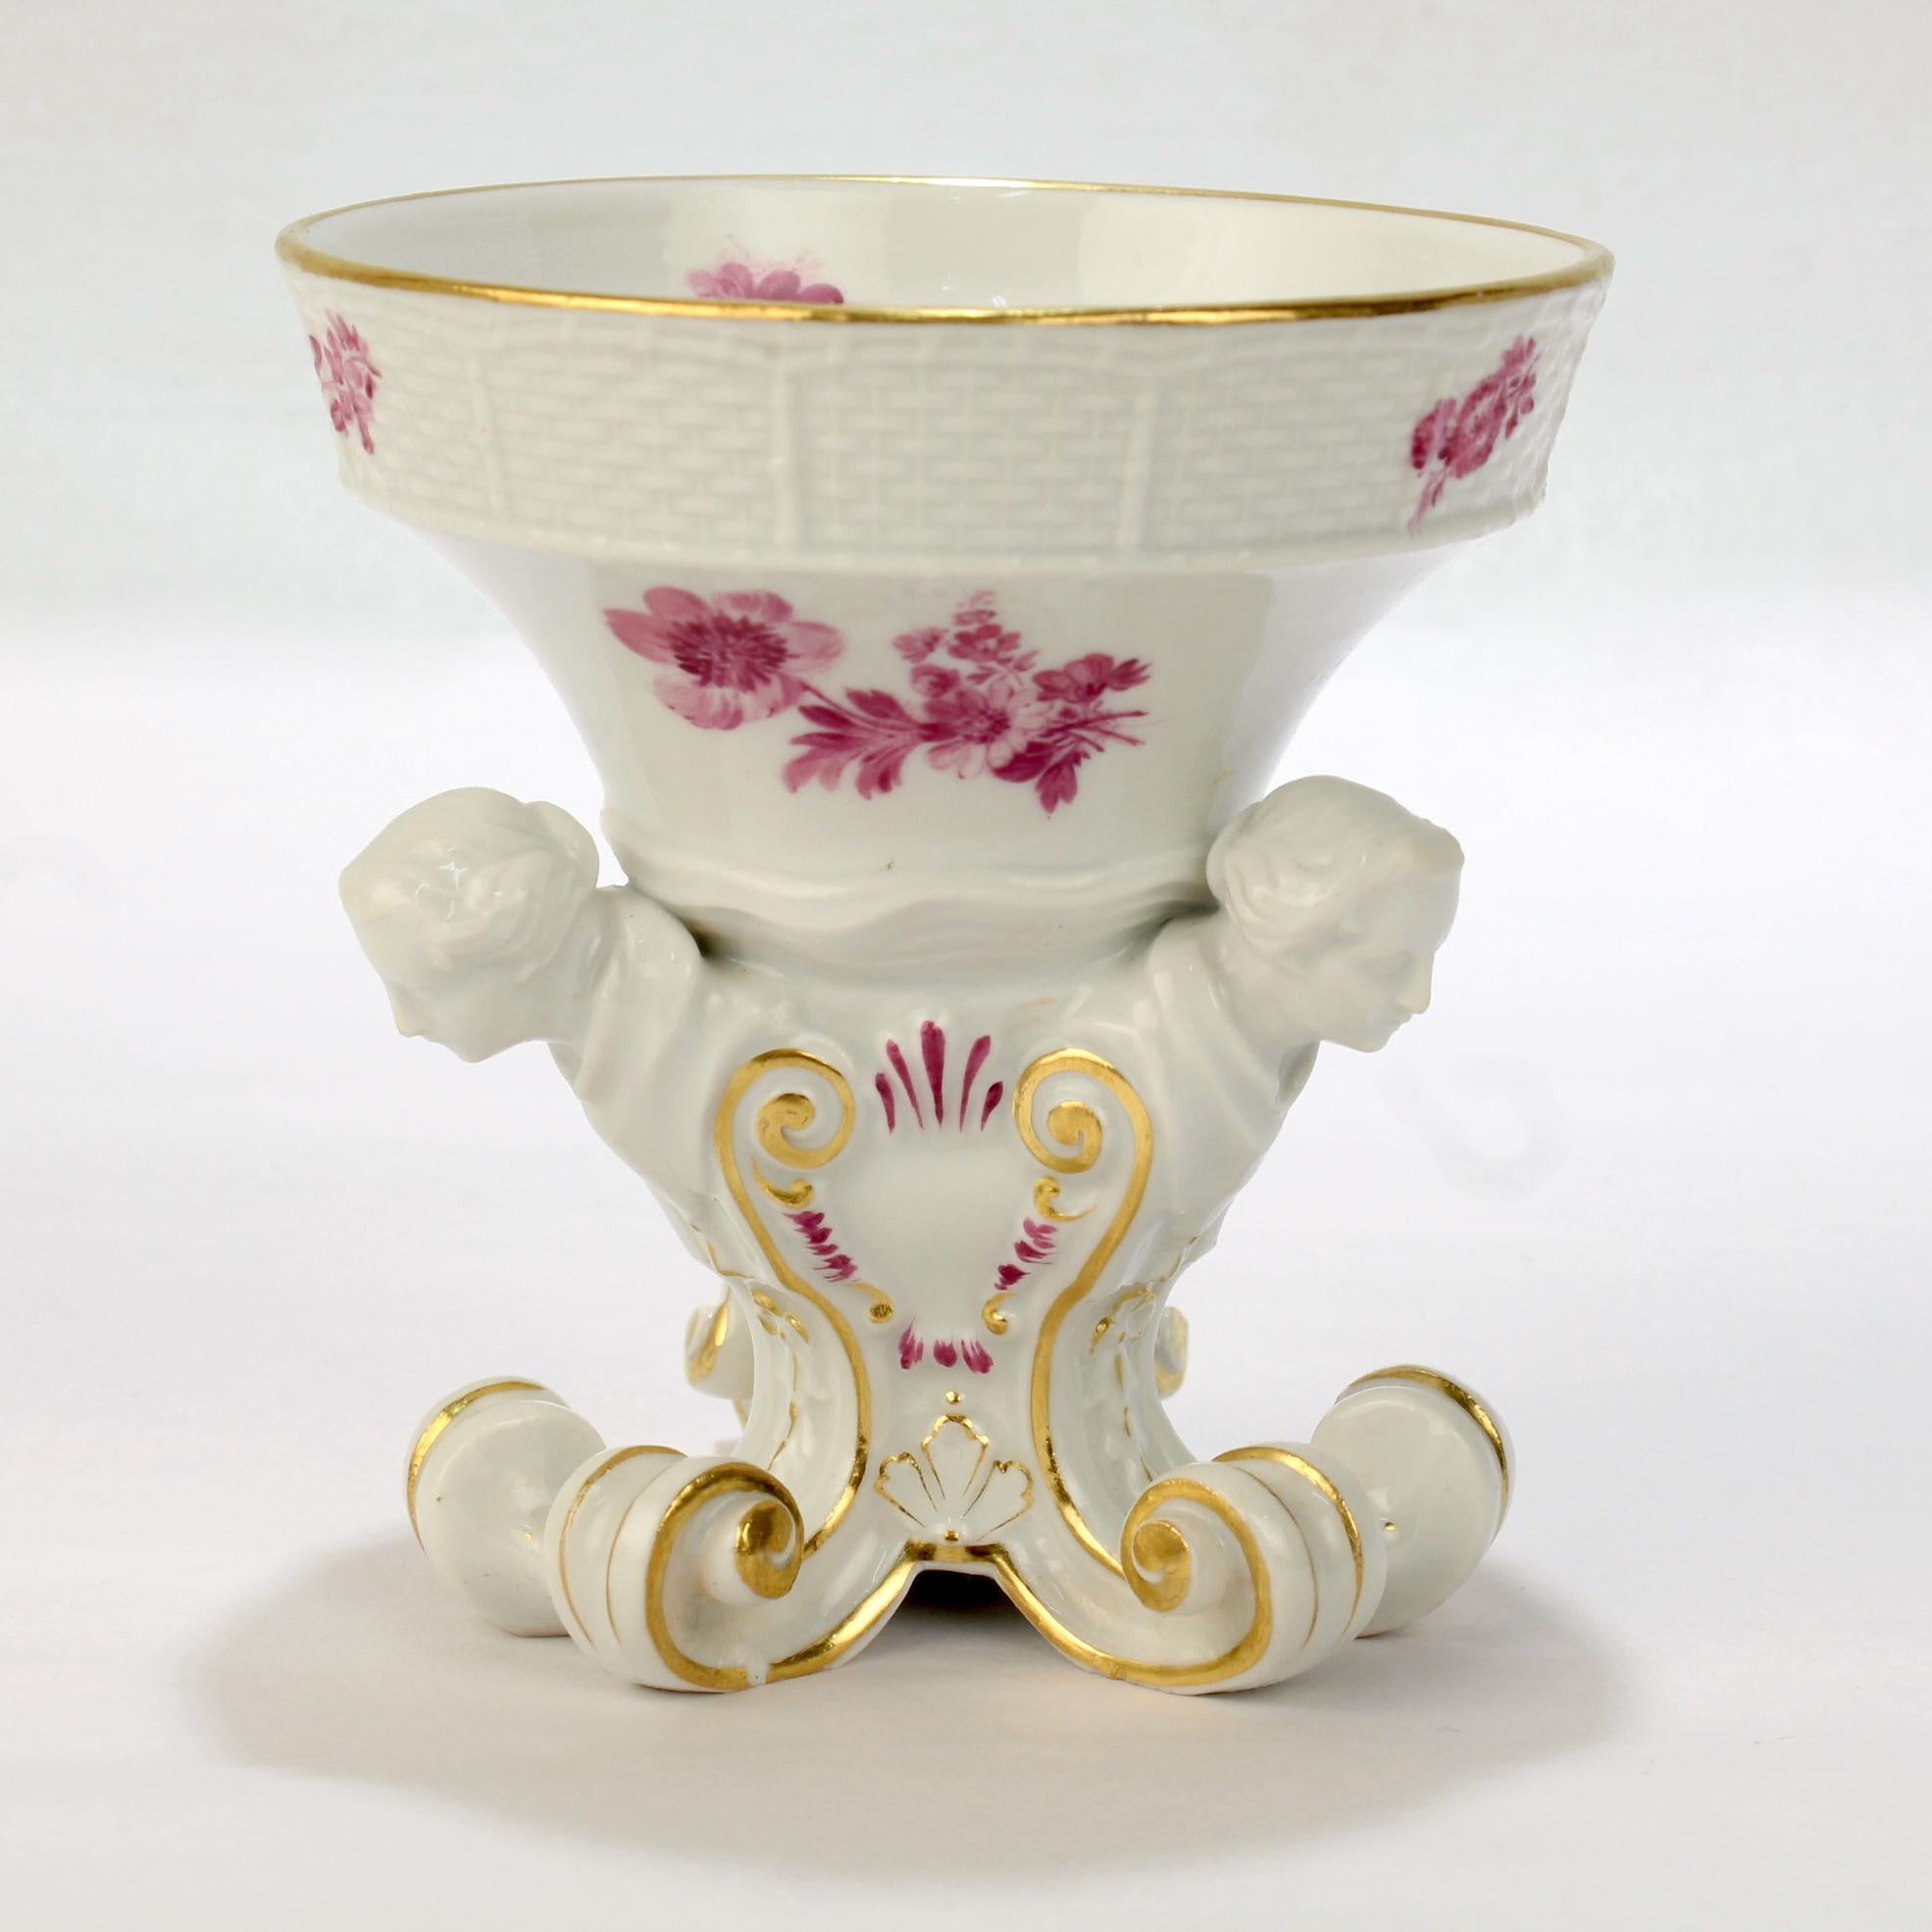 4 Antique Meissen Porcelain Footed Frauenkopf Salt Cellars with Puce Flowers For Sale 2